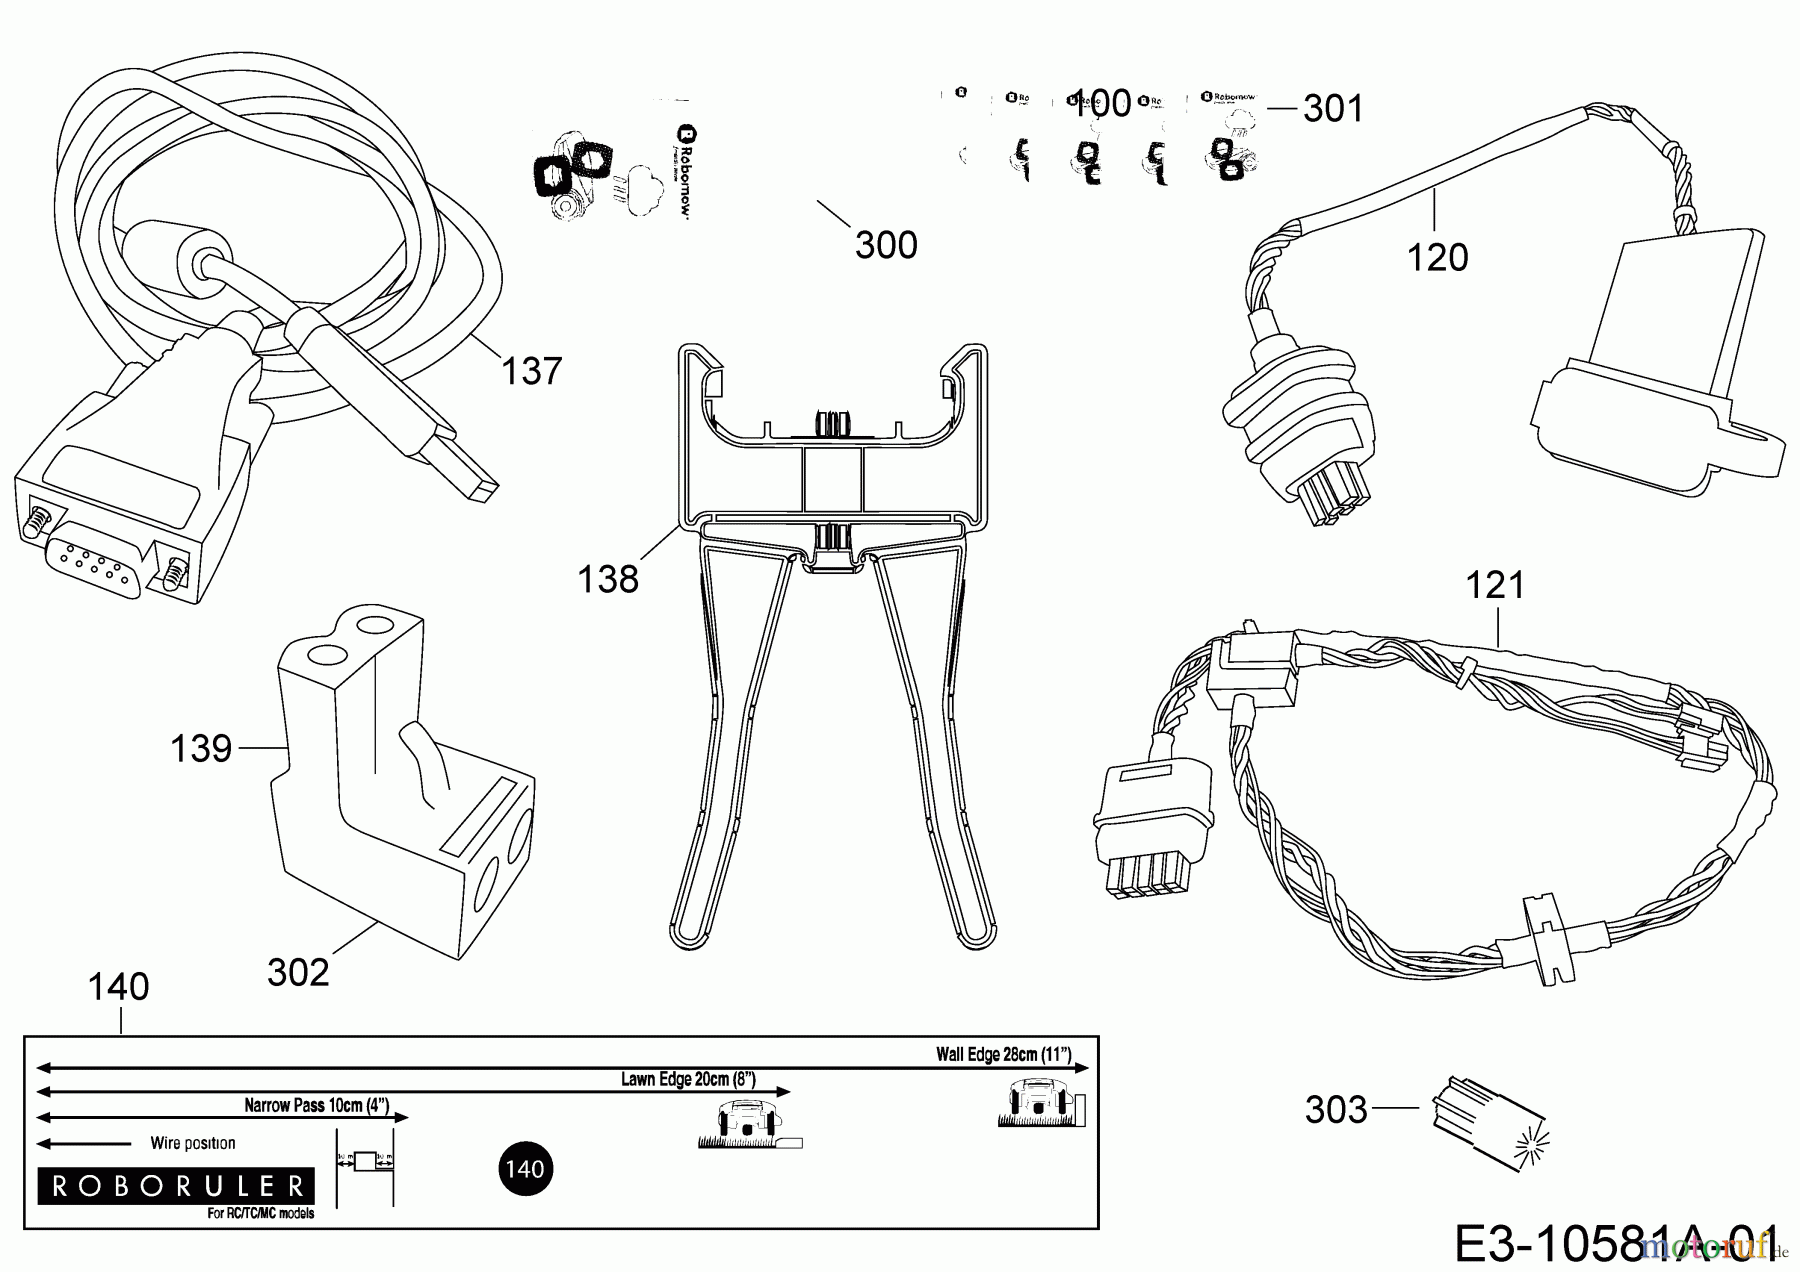  Robomow Mähroboter TC300 PRD7004P  (2014) Kabel, Kabelanschluß, Regensensor, Werkzeug